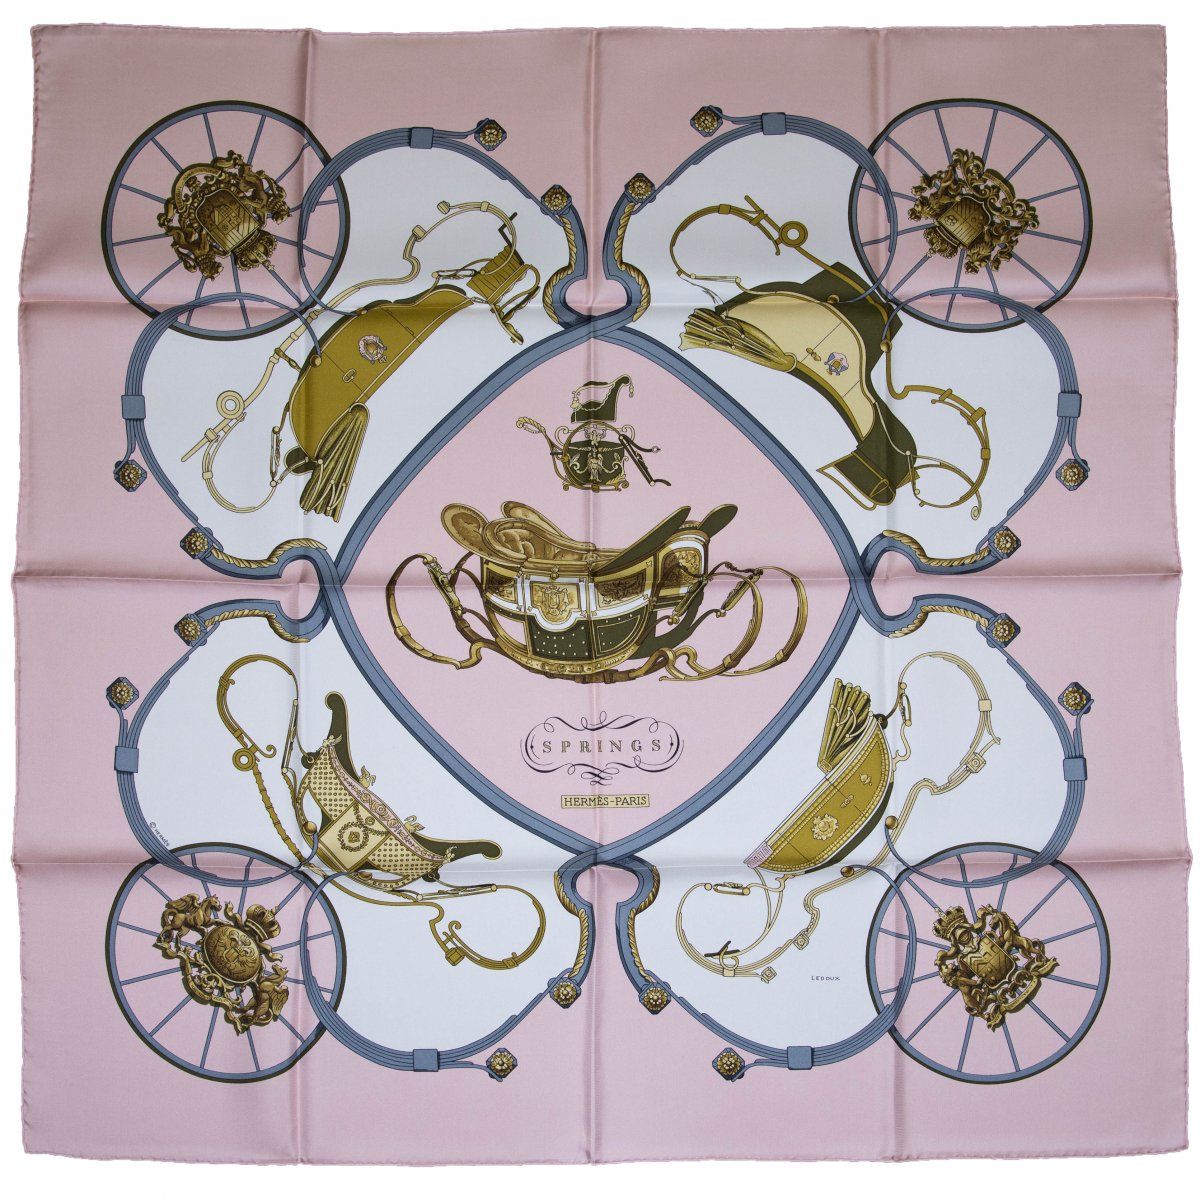 Null 爱马仕，巴黎，"春天 "围巾，1974年，丝绸，多色印刷。约90 x 90厘米。设计。菲利普-勒杜。

签名：© HERMÈS, LEDOUX,